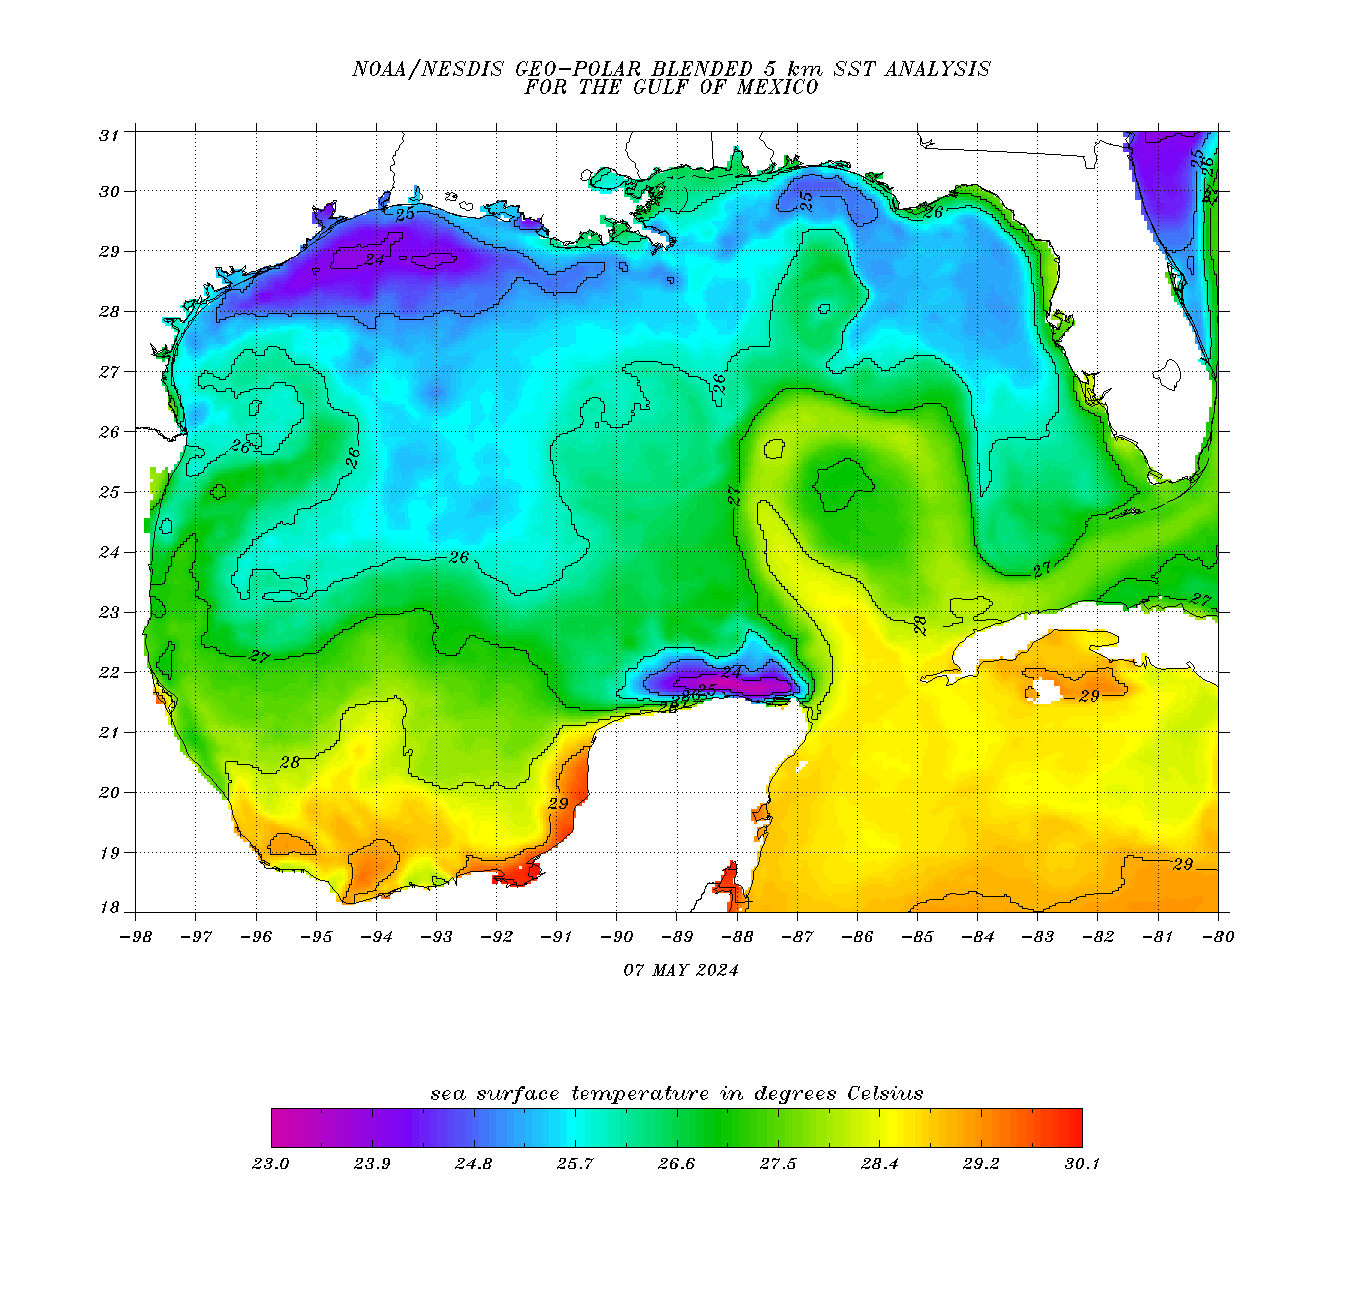 Gulf of Mexico sea surface temperature map - tropical storm or hurricane Idalia